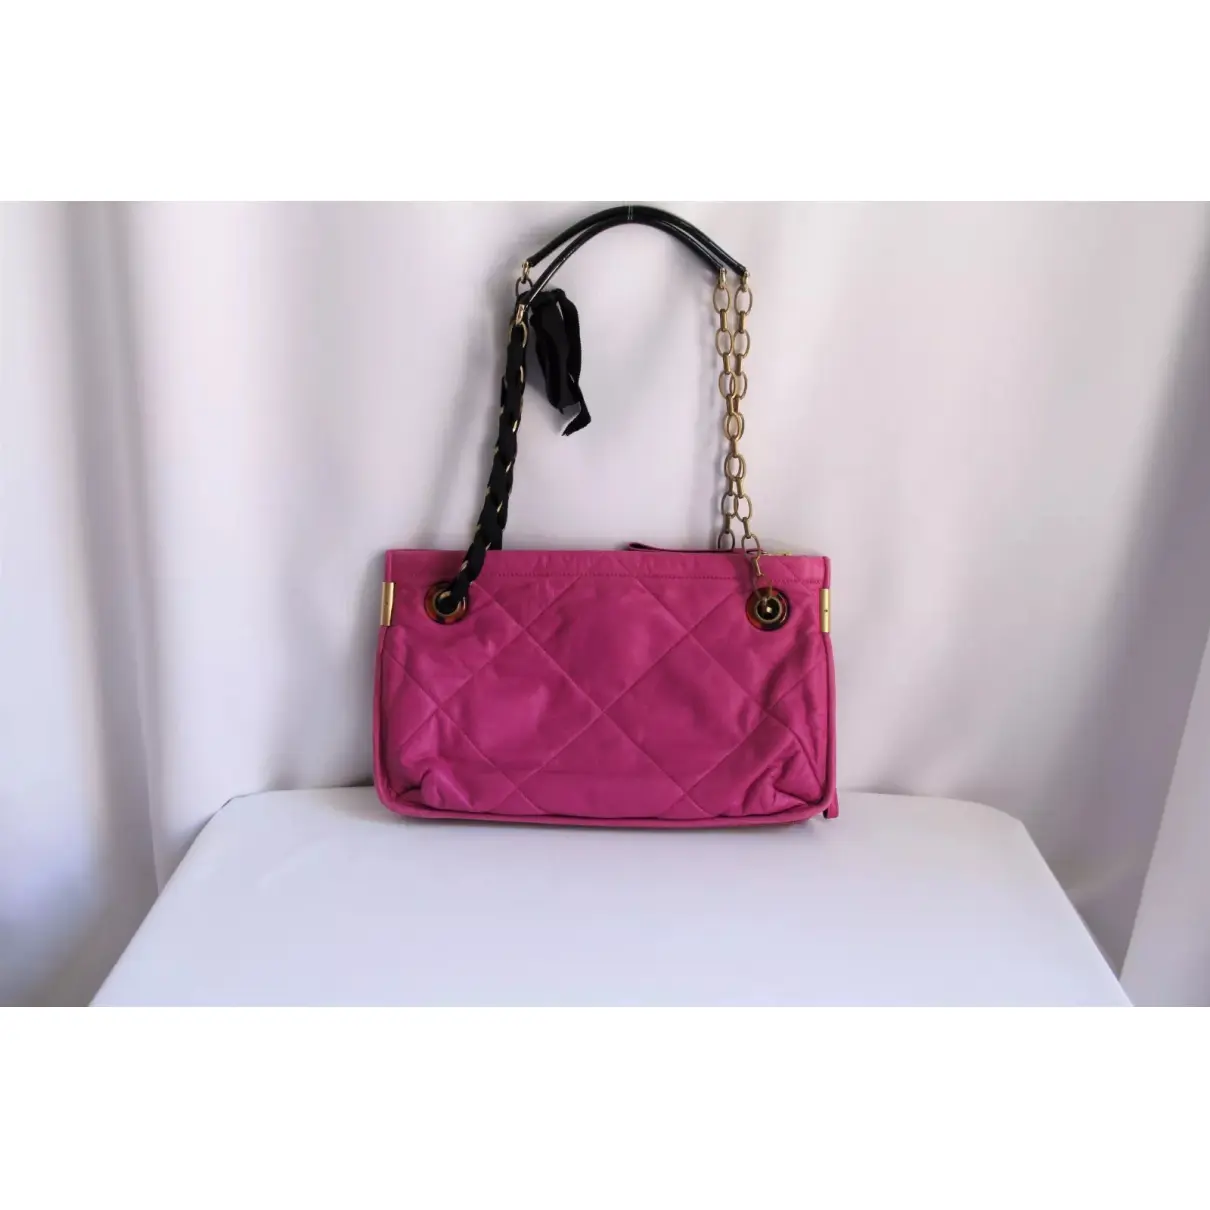 Buy Lanvin Amalia leather crossbody bag online